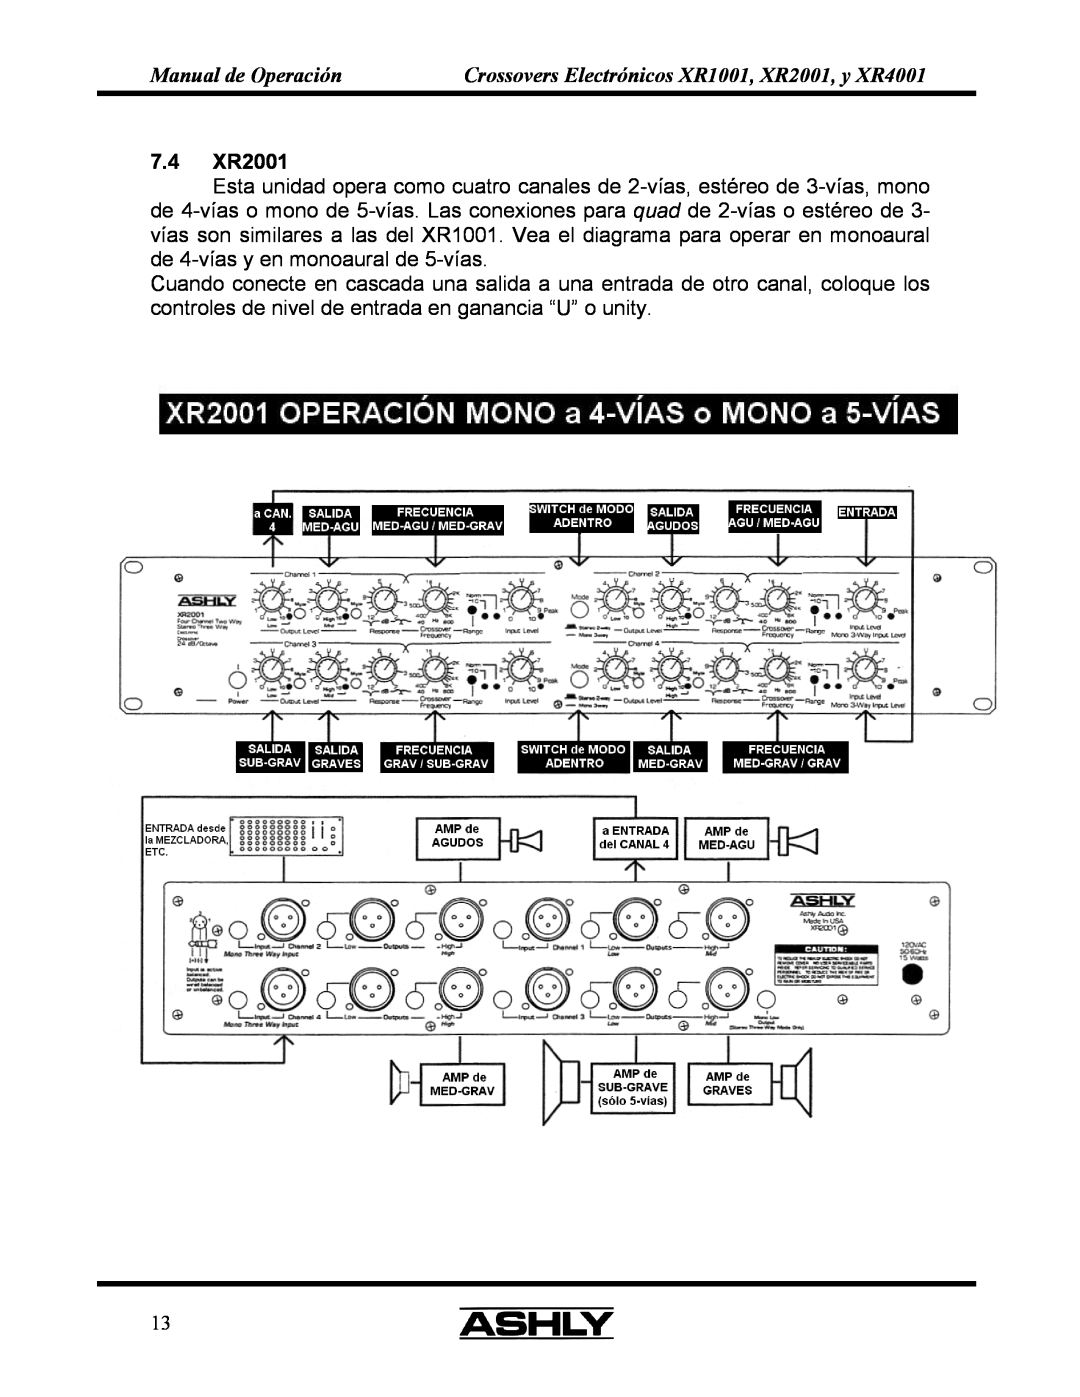 Ashly XR 2OO1, XR 4OO1, XR 1OO1 manual Manual de Operación, Crossovers Electrónicos XR1001, XR2001, y XR4001, 7.4 XR2001 